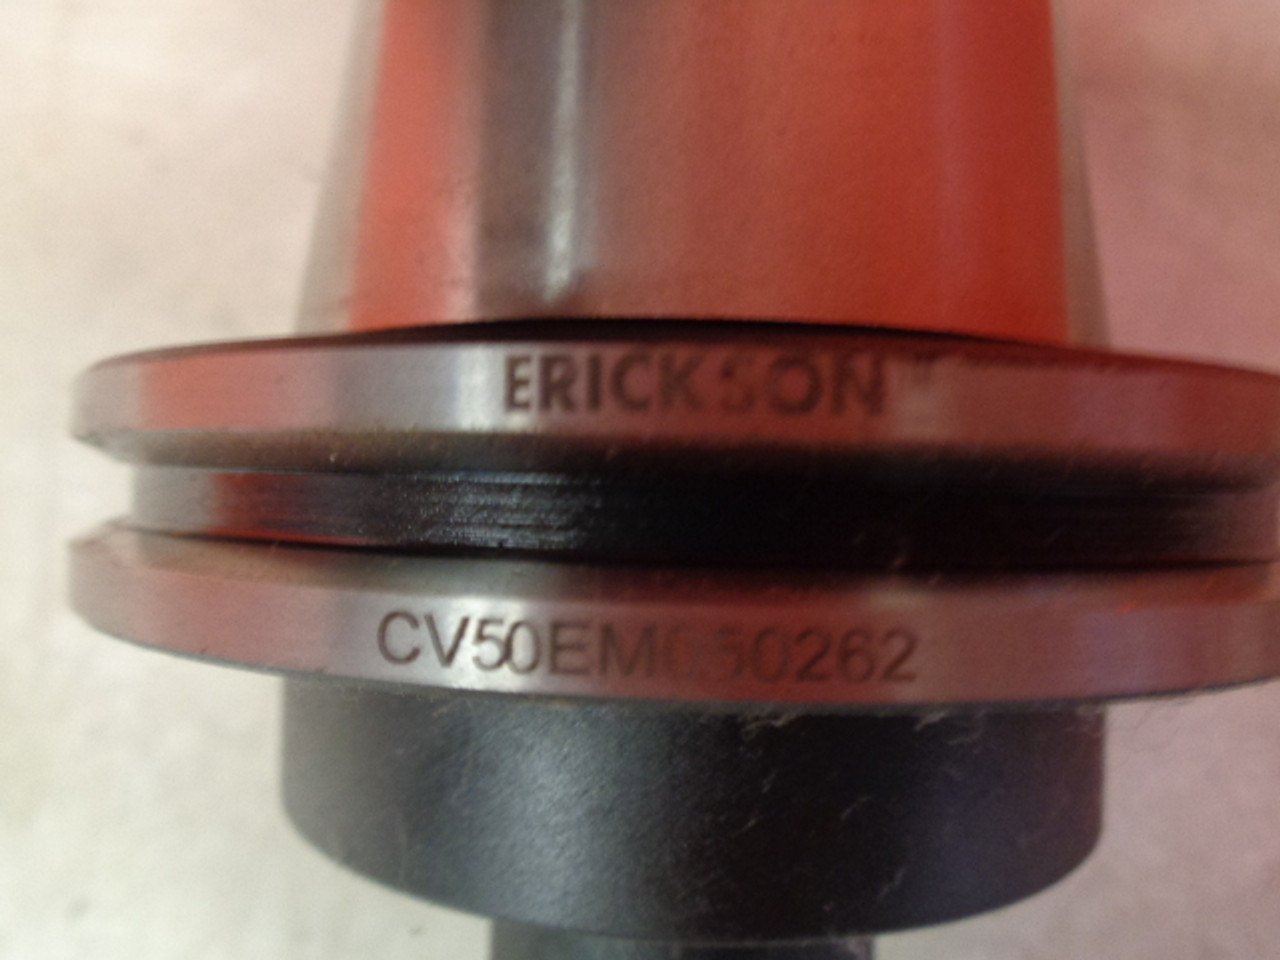 Erickson CV50EM050262 Cat# 50 Tool Holder